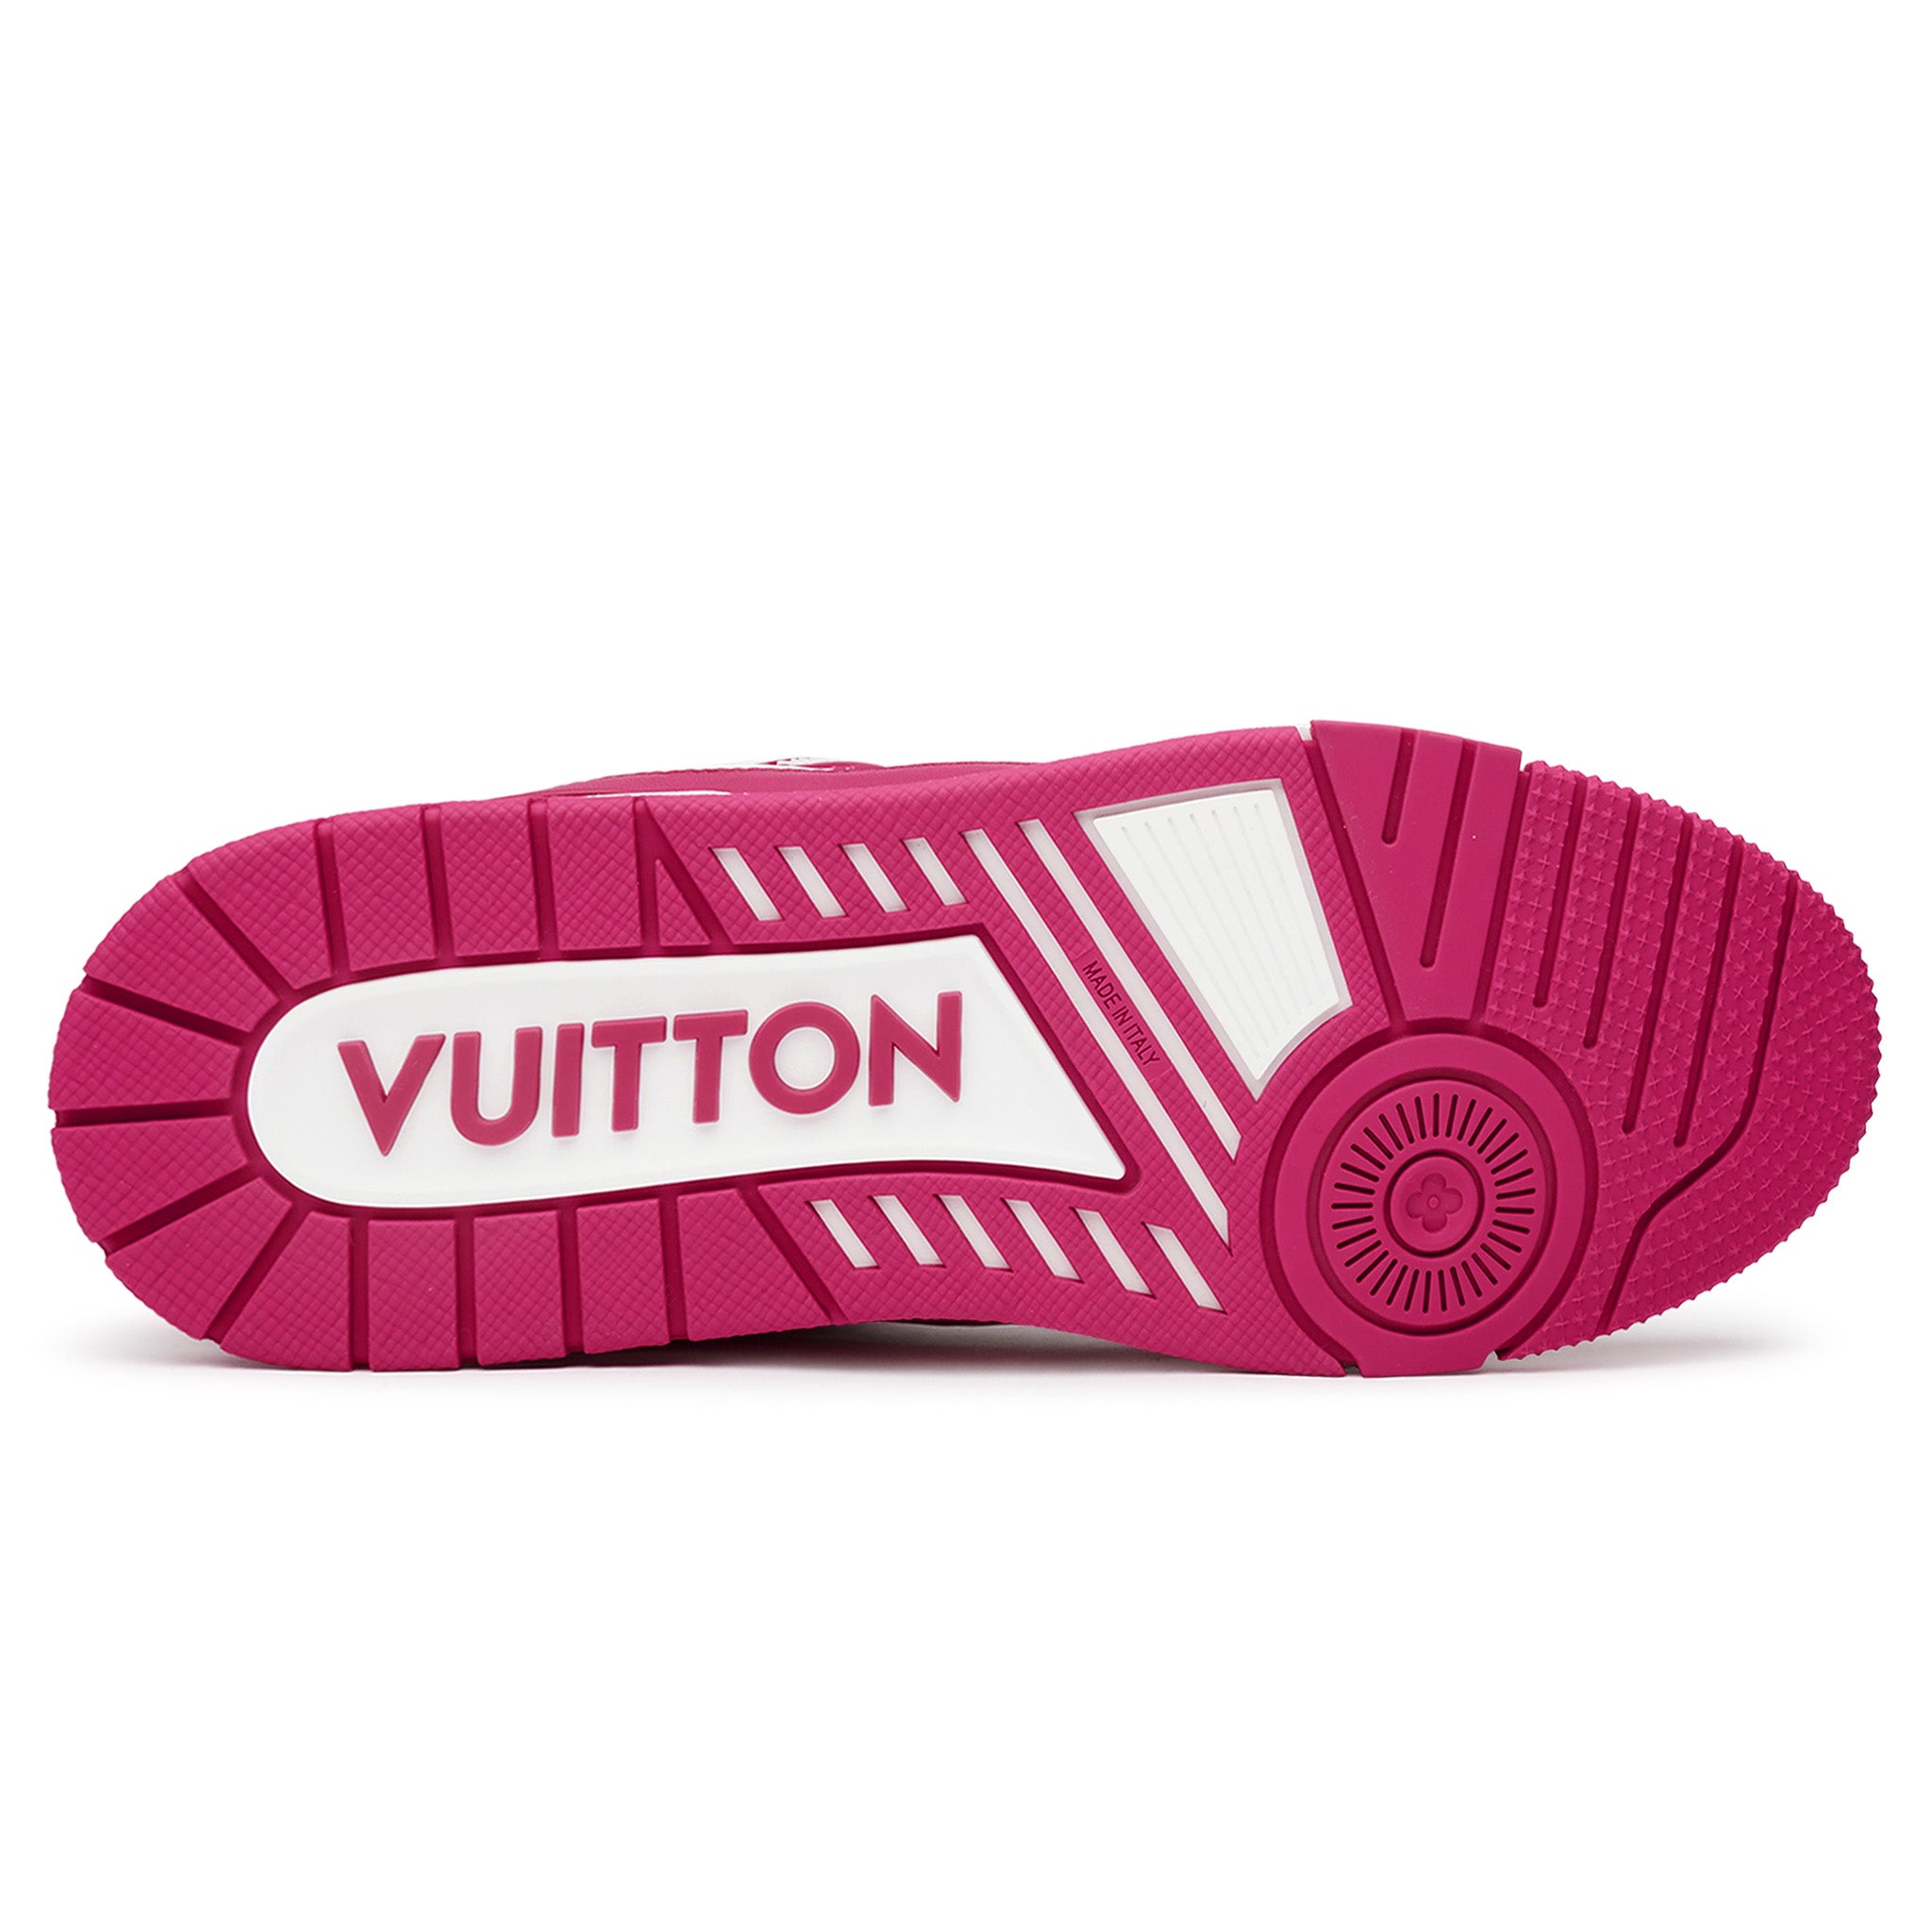 Louis Vuitton LV Trainer '54' White Red Sneaker, Cheap Stclaircomo Jordan  outlet